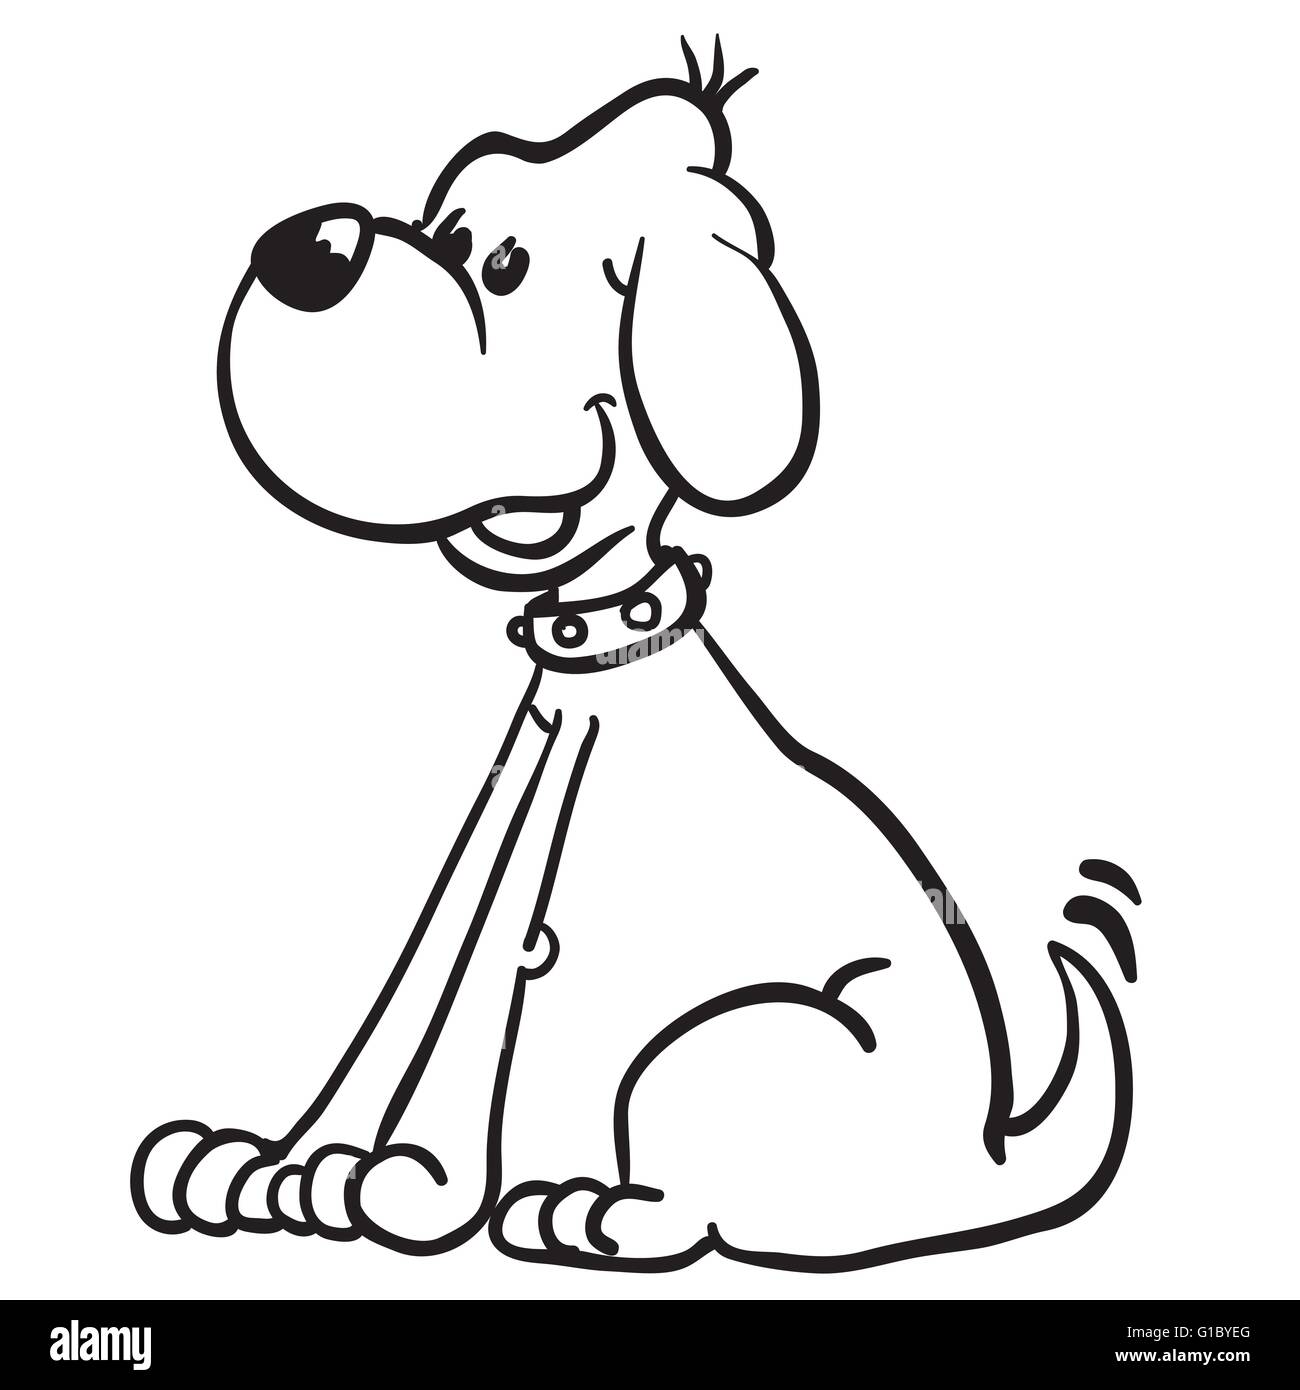 einfache Schwarz-weiß Hund cartoon Stock-Vektorgrafik - Alamy